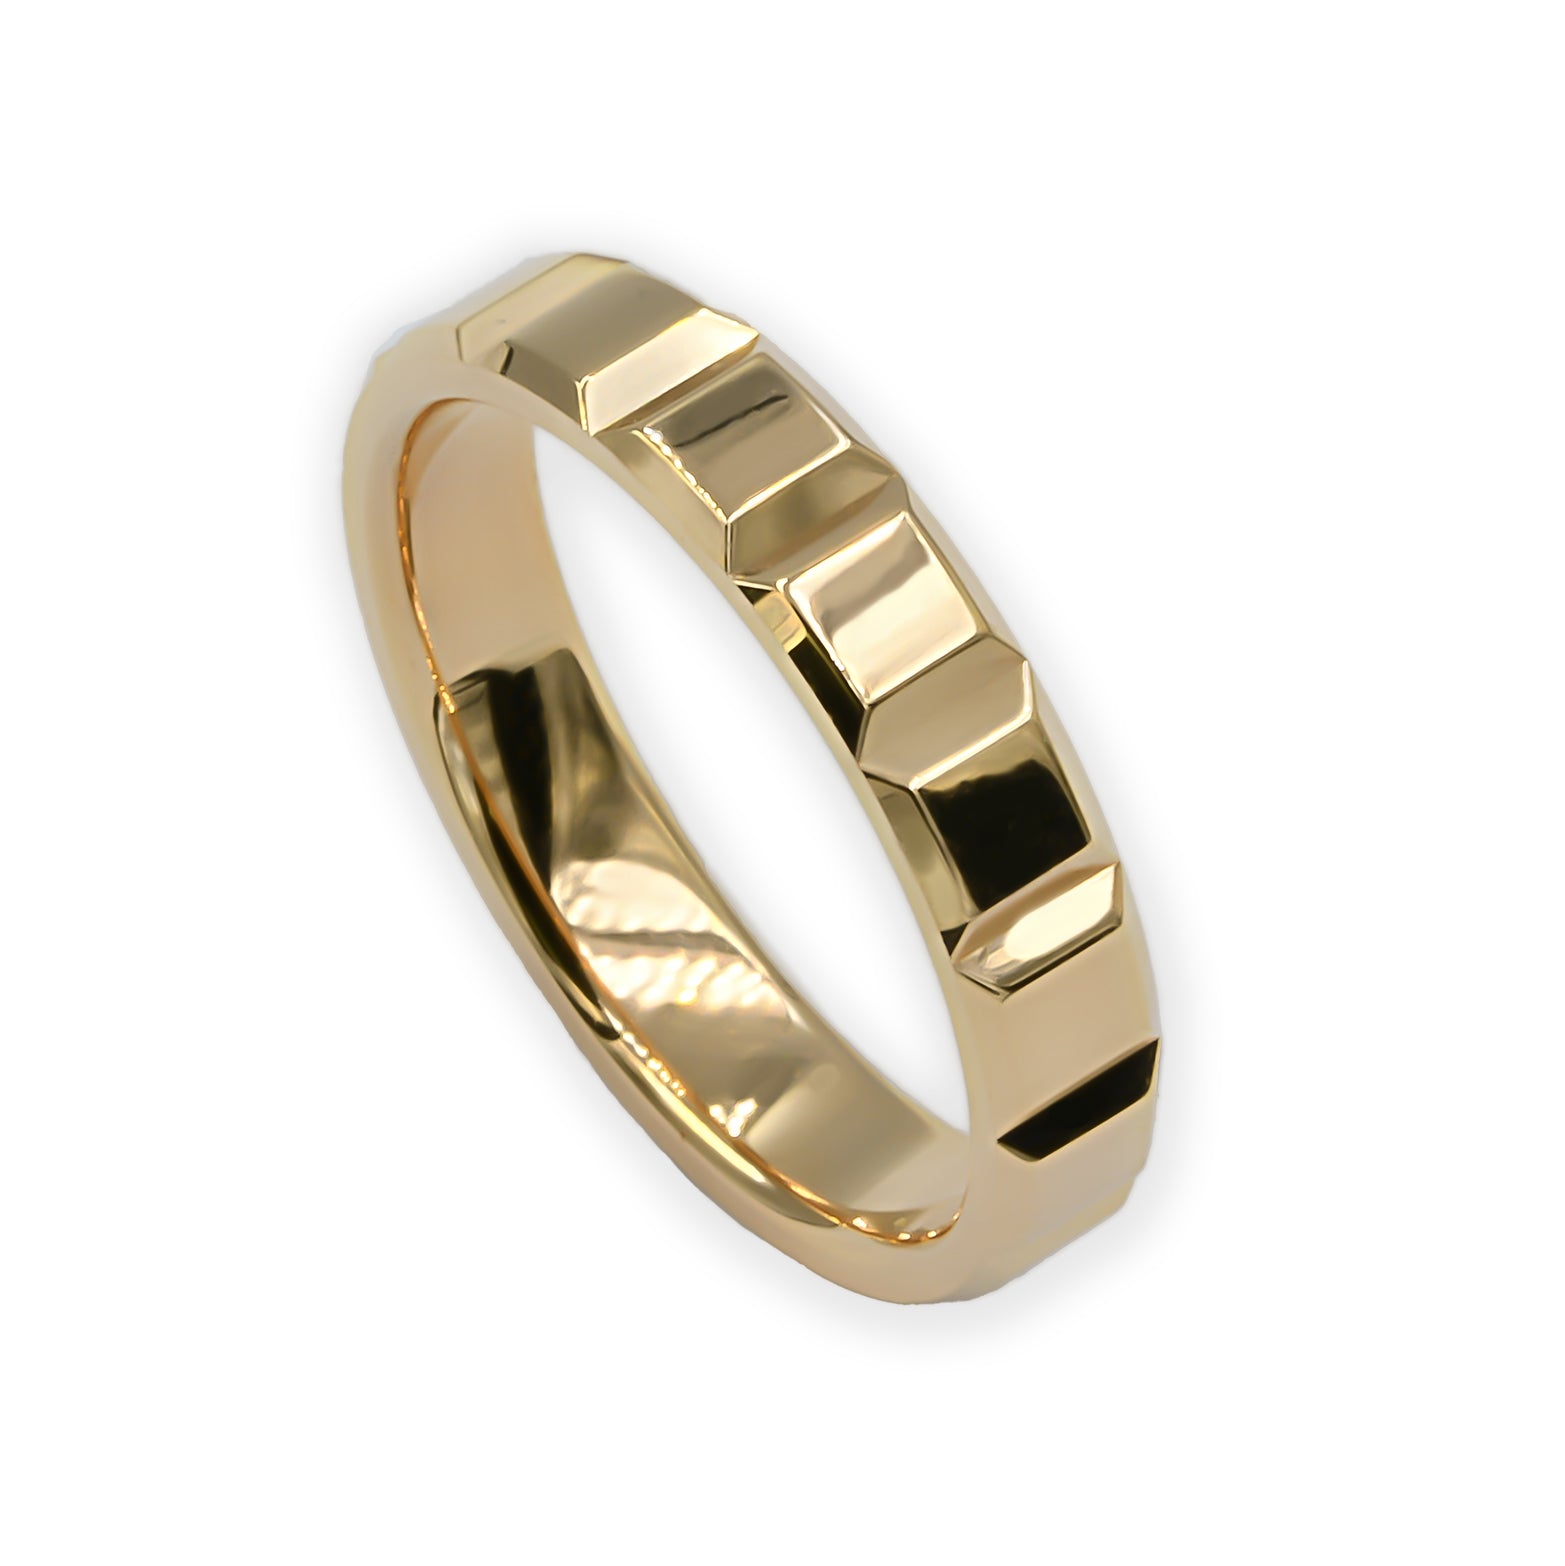 Ring CRUSH 4mm square shape yellow gold 18K 750